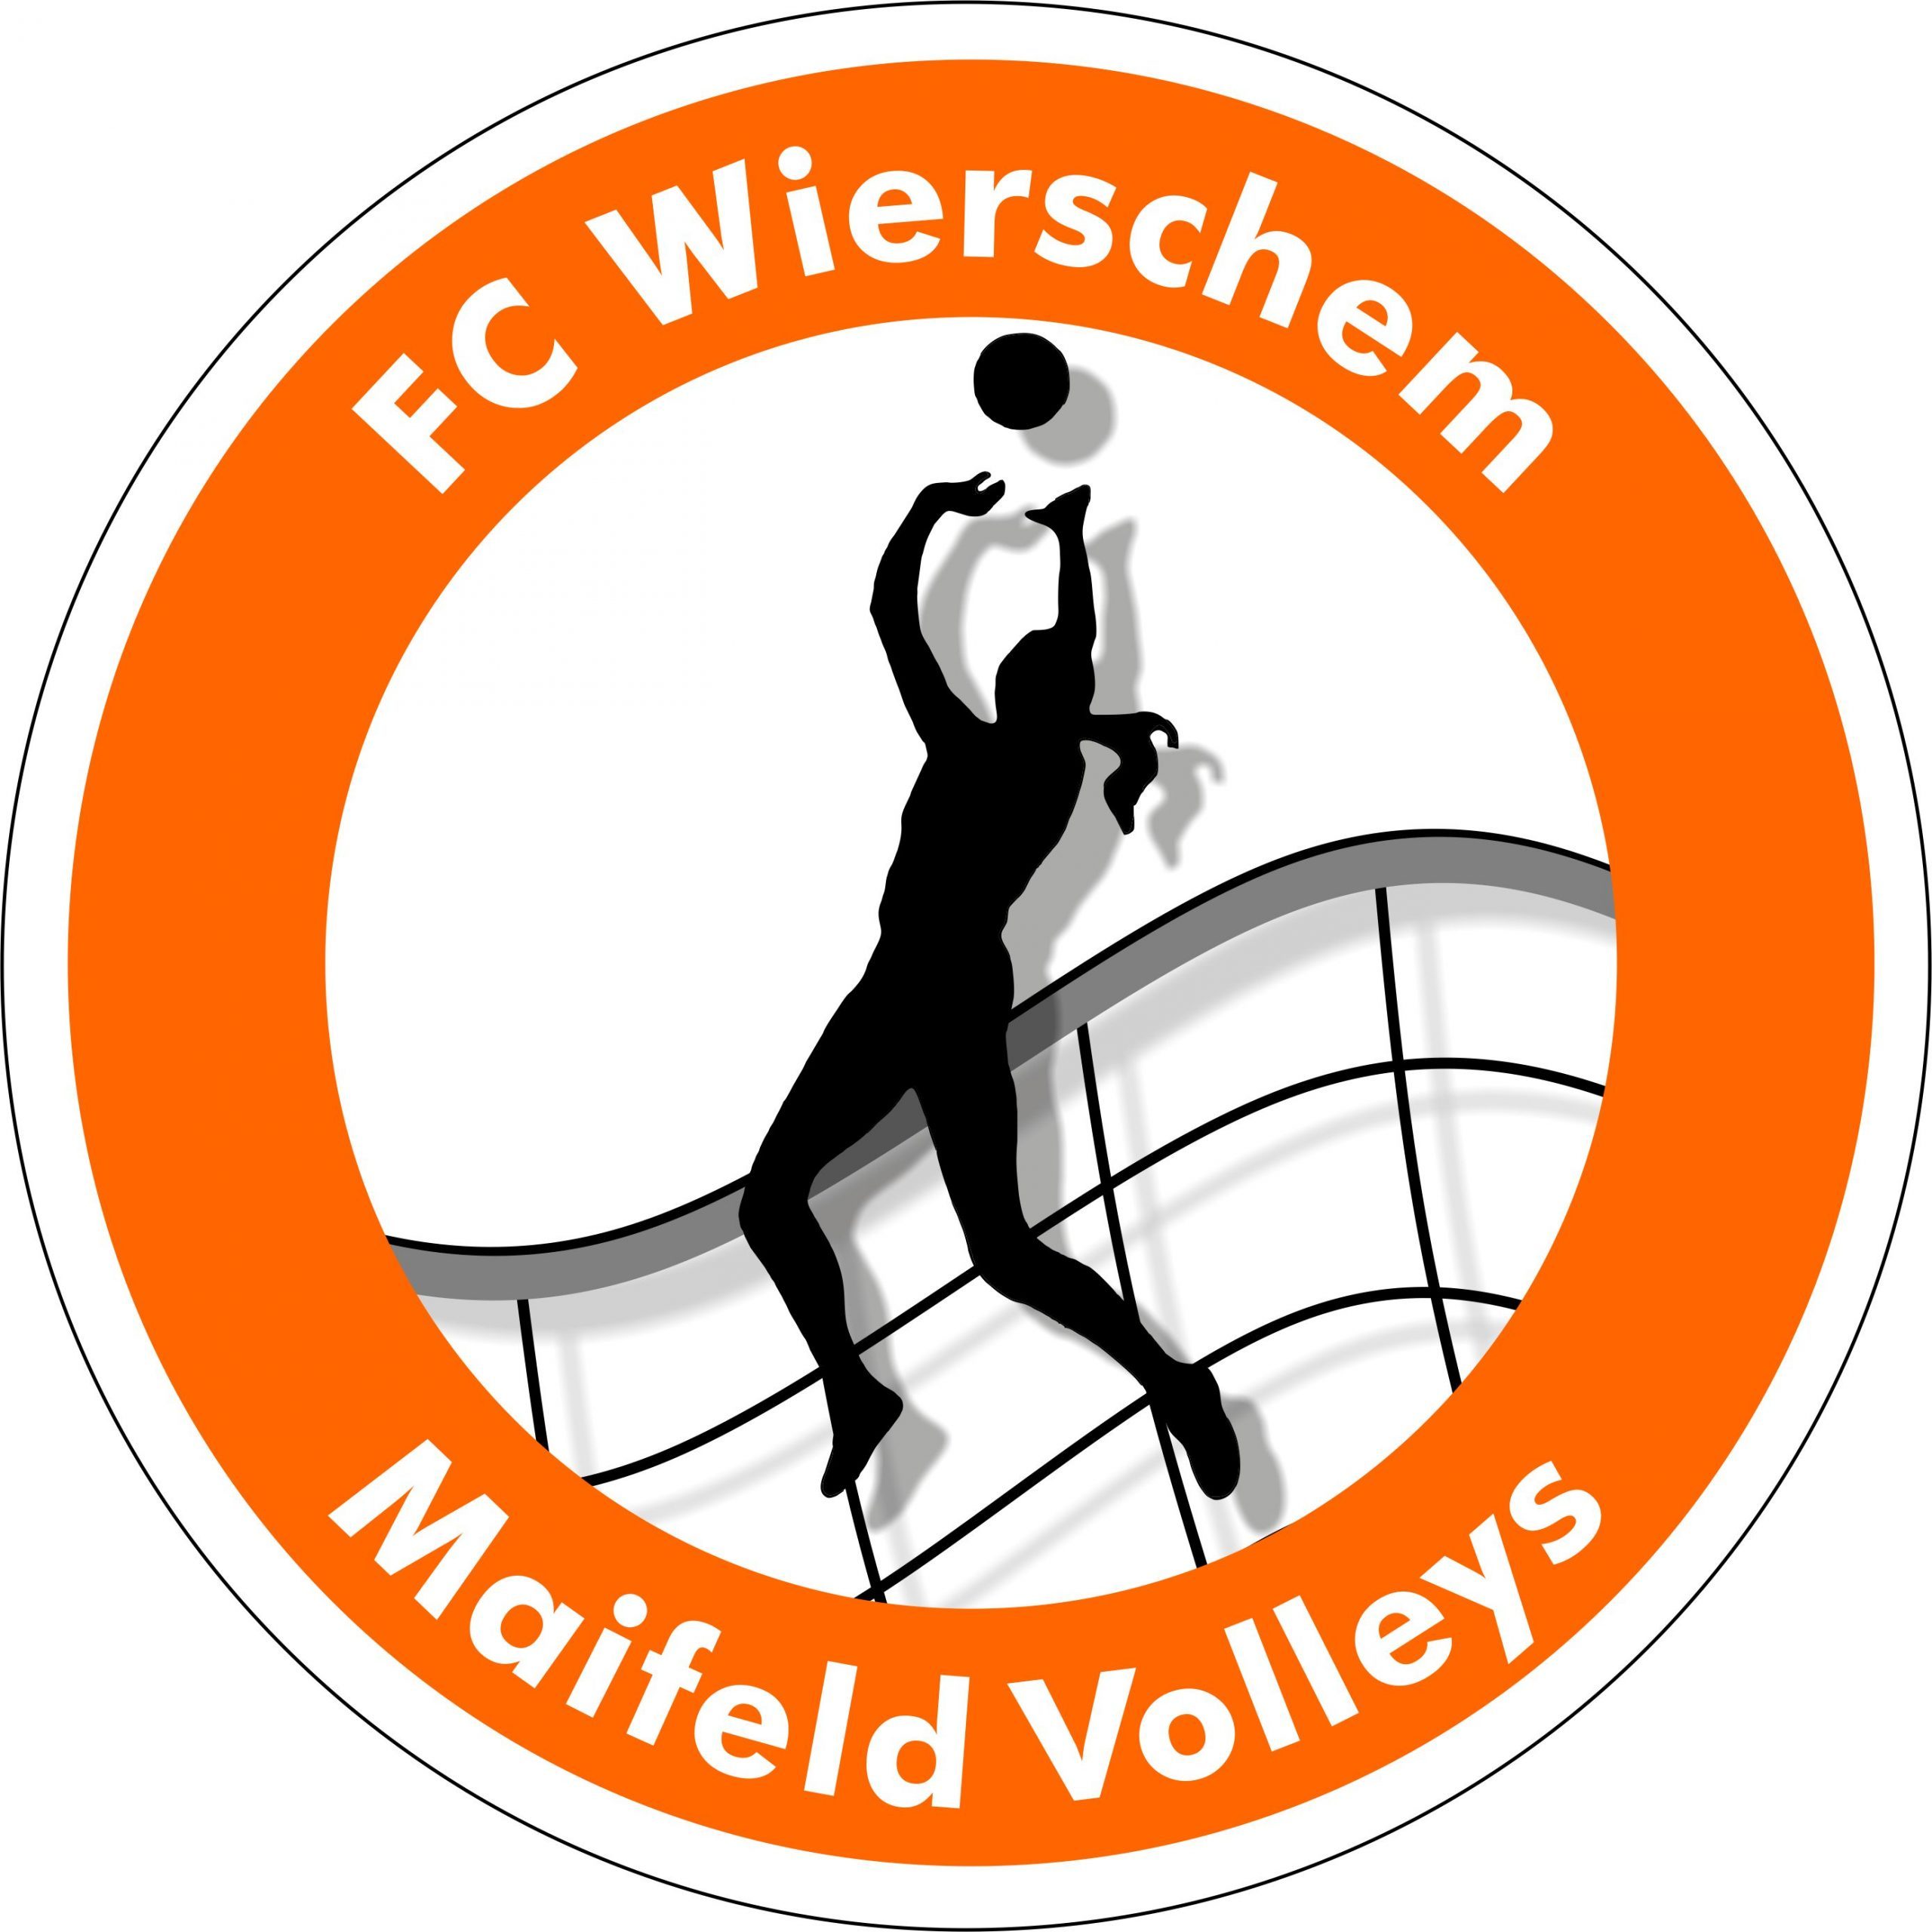 Maifeld Volleys